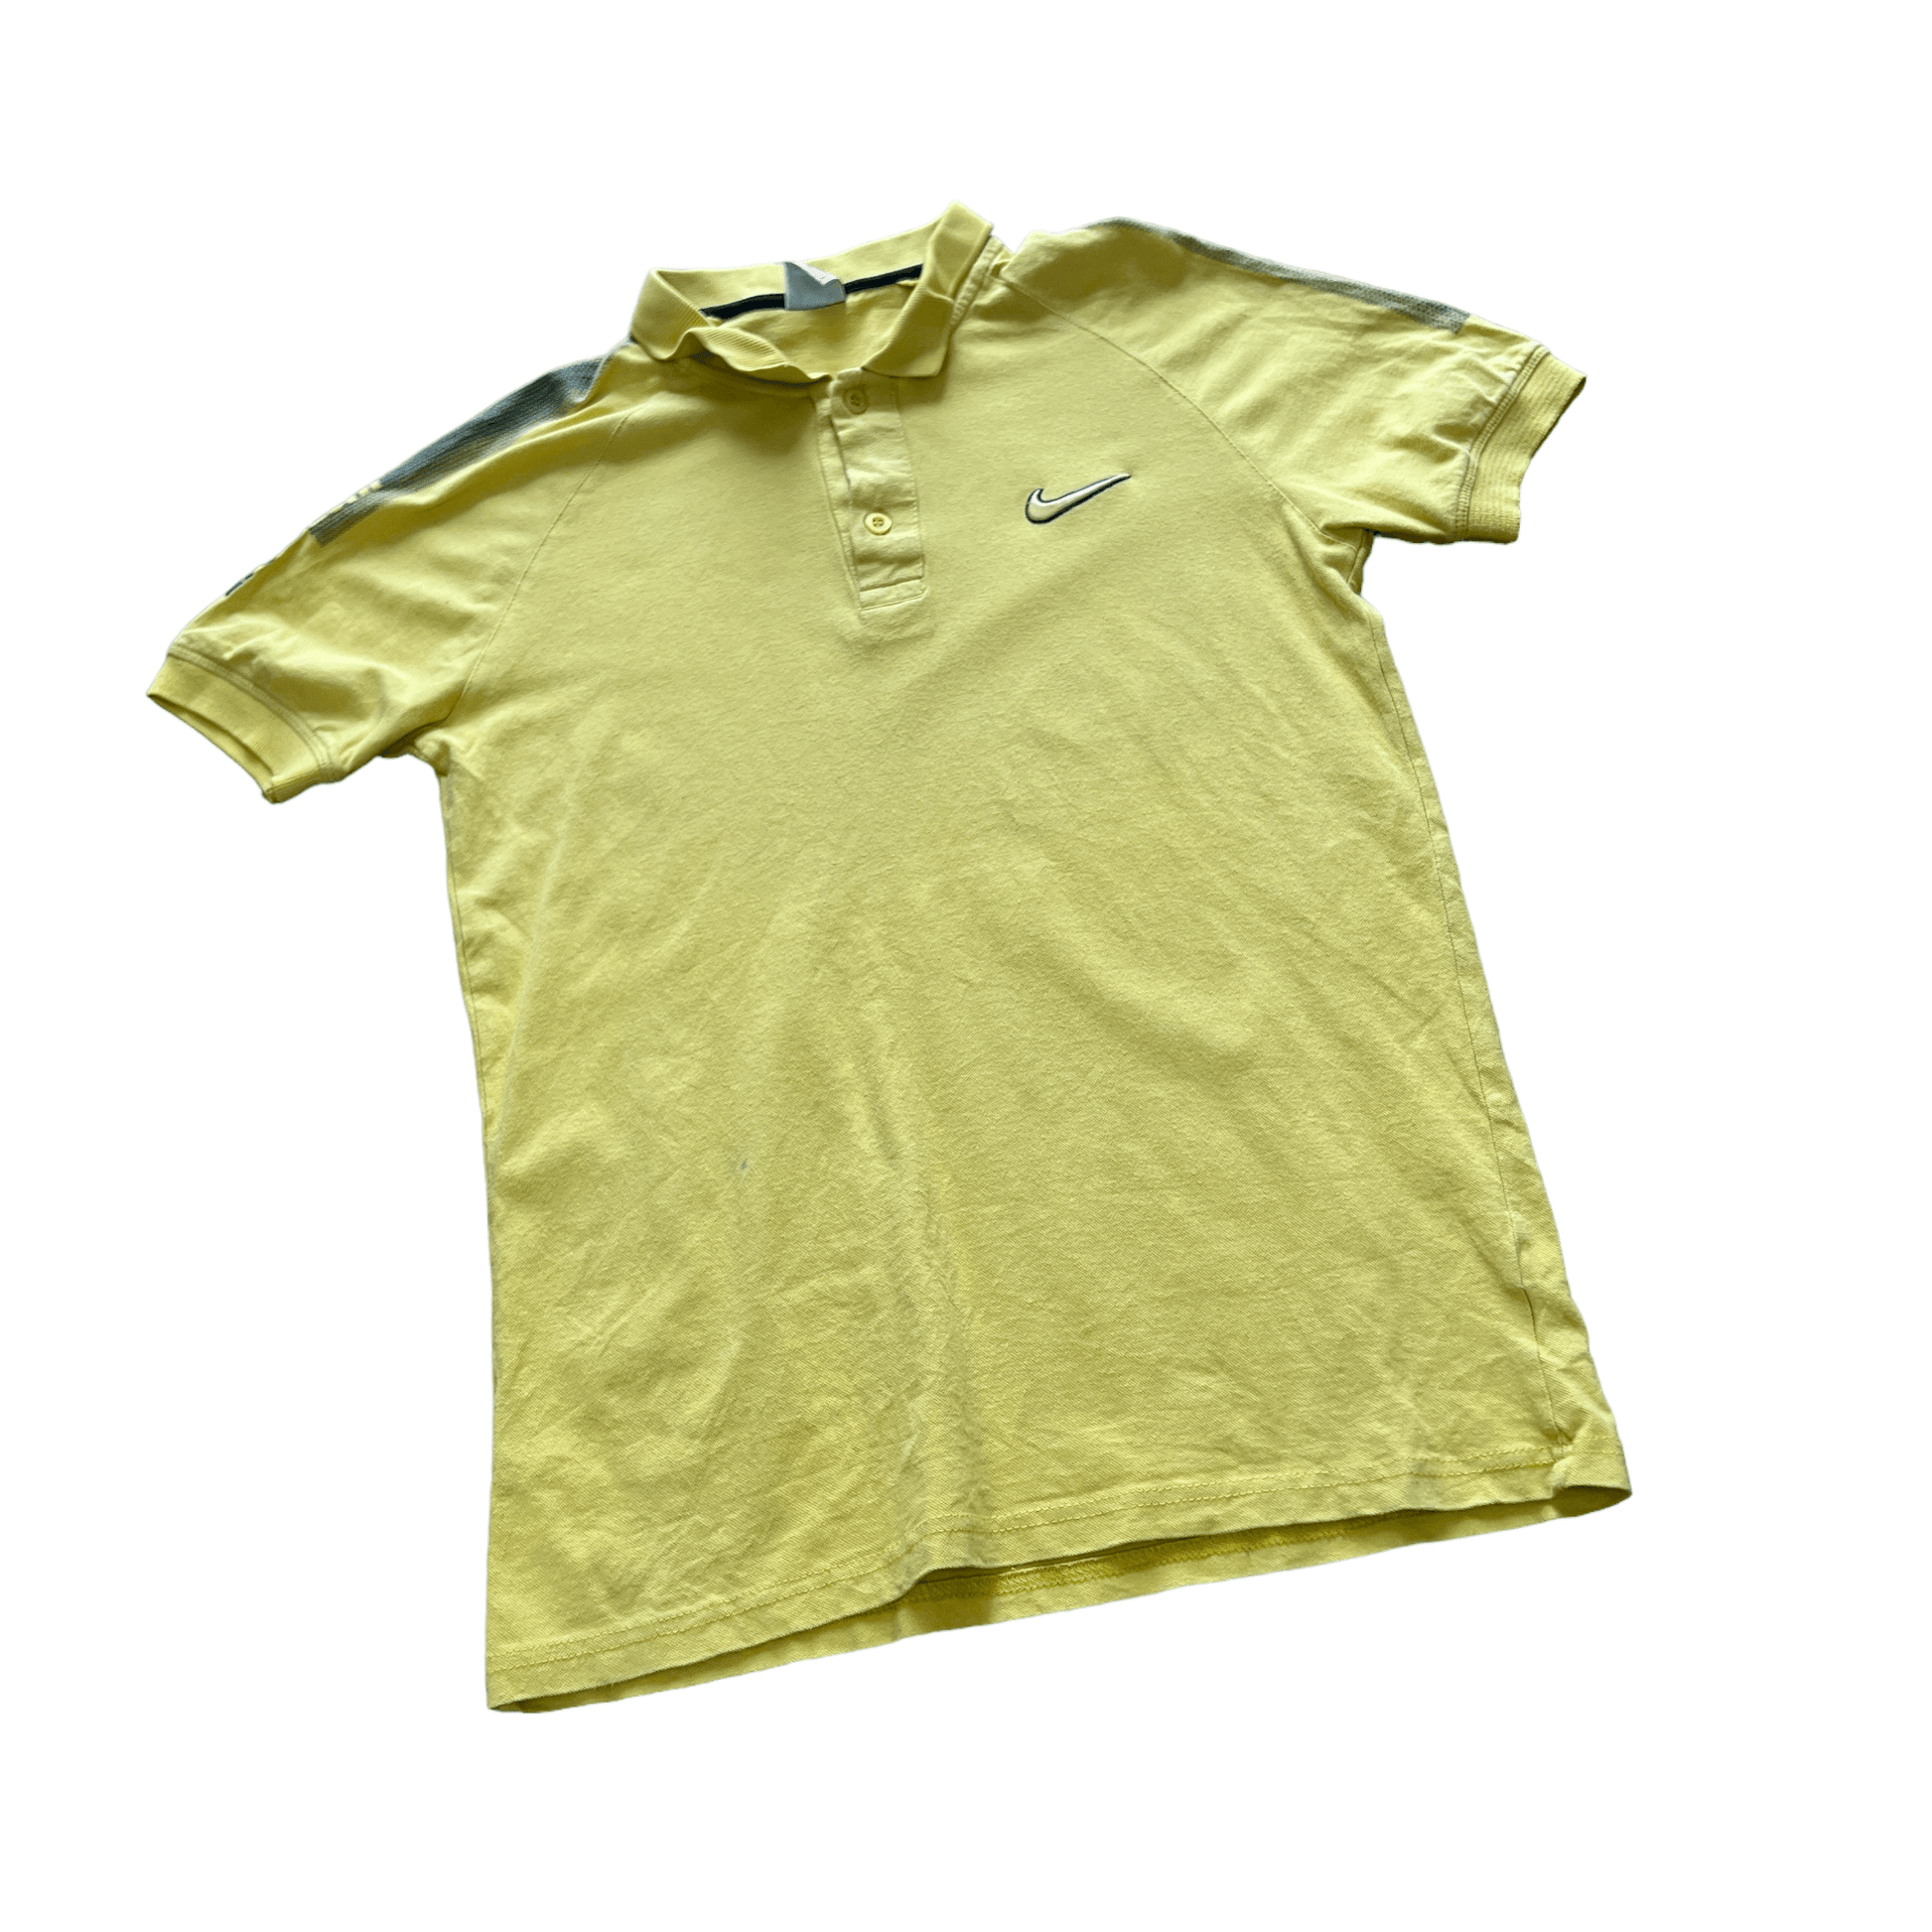 Vintage 90s Yellow Nike Polo Shirt - Small - The Streetwear Studio